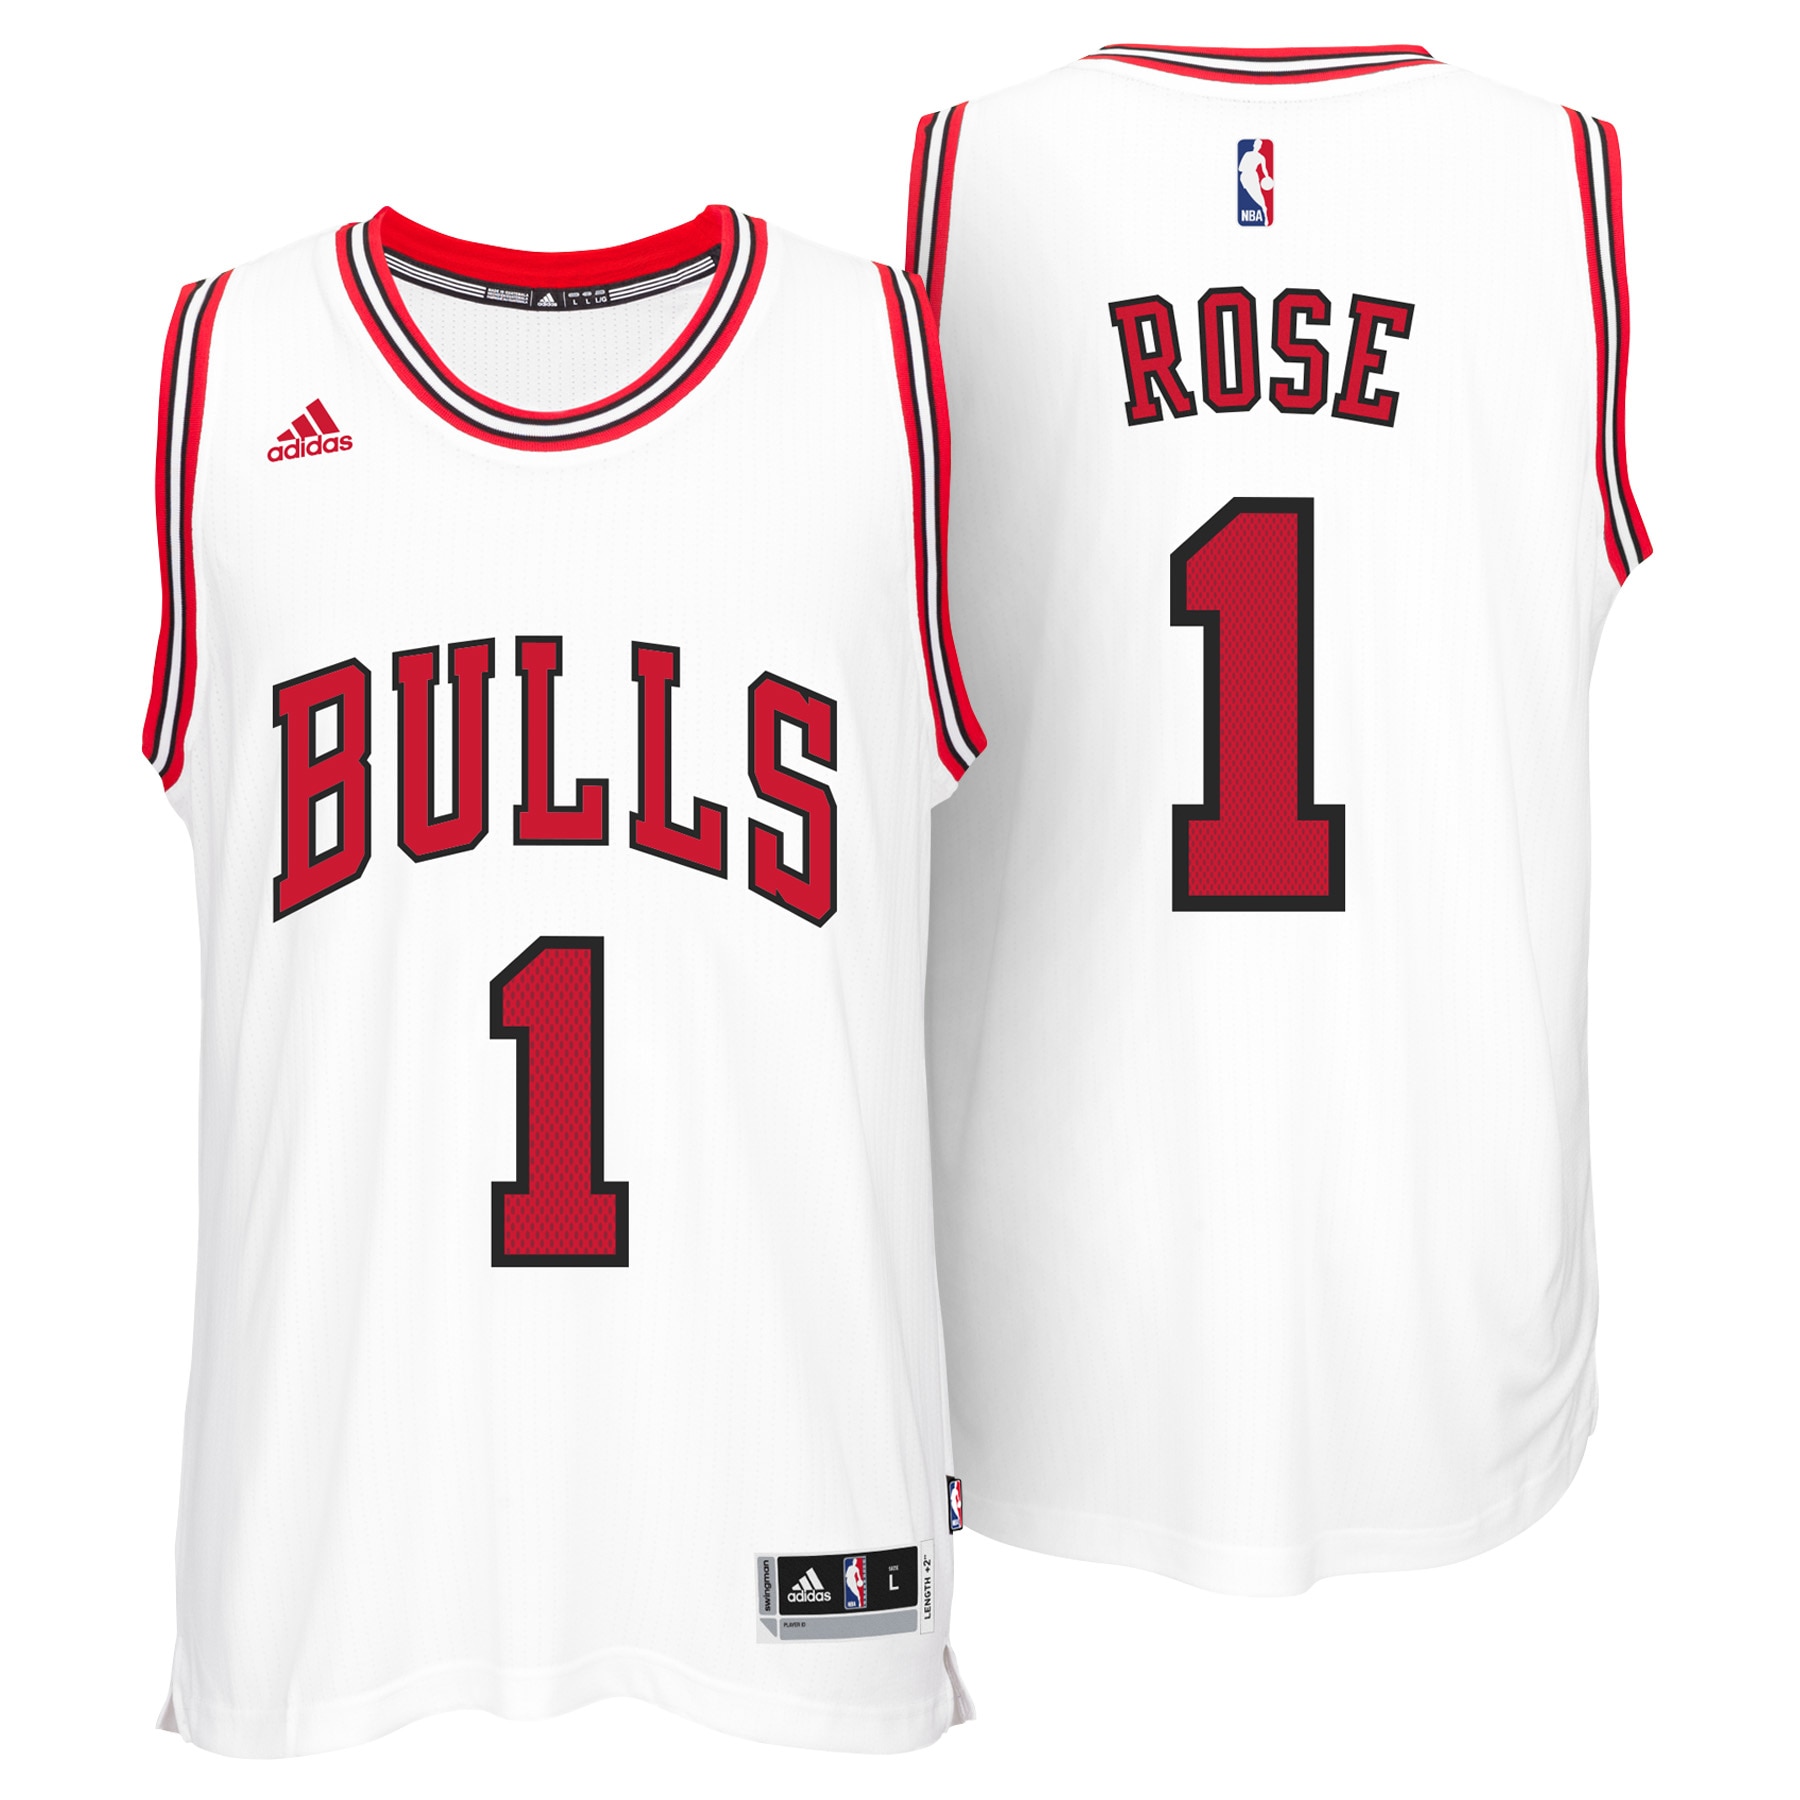 rose jersey